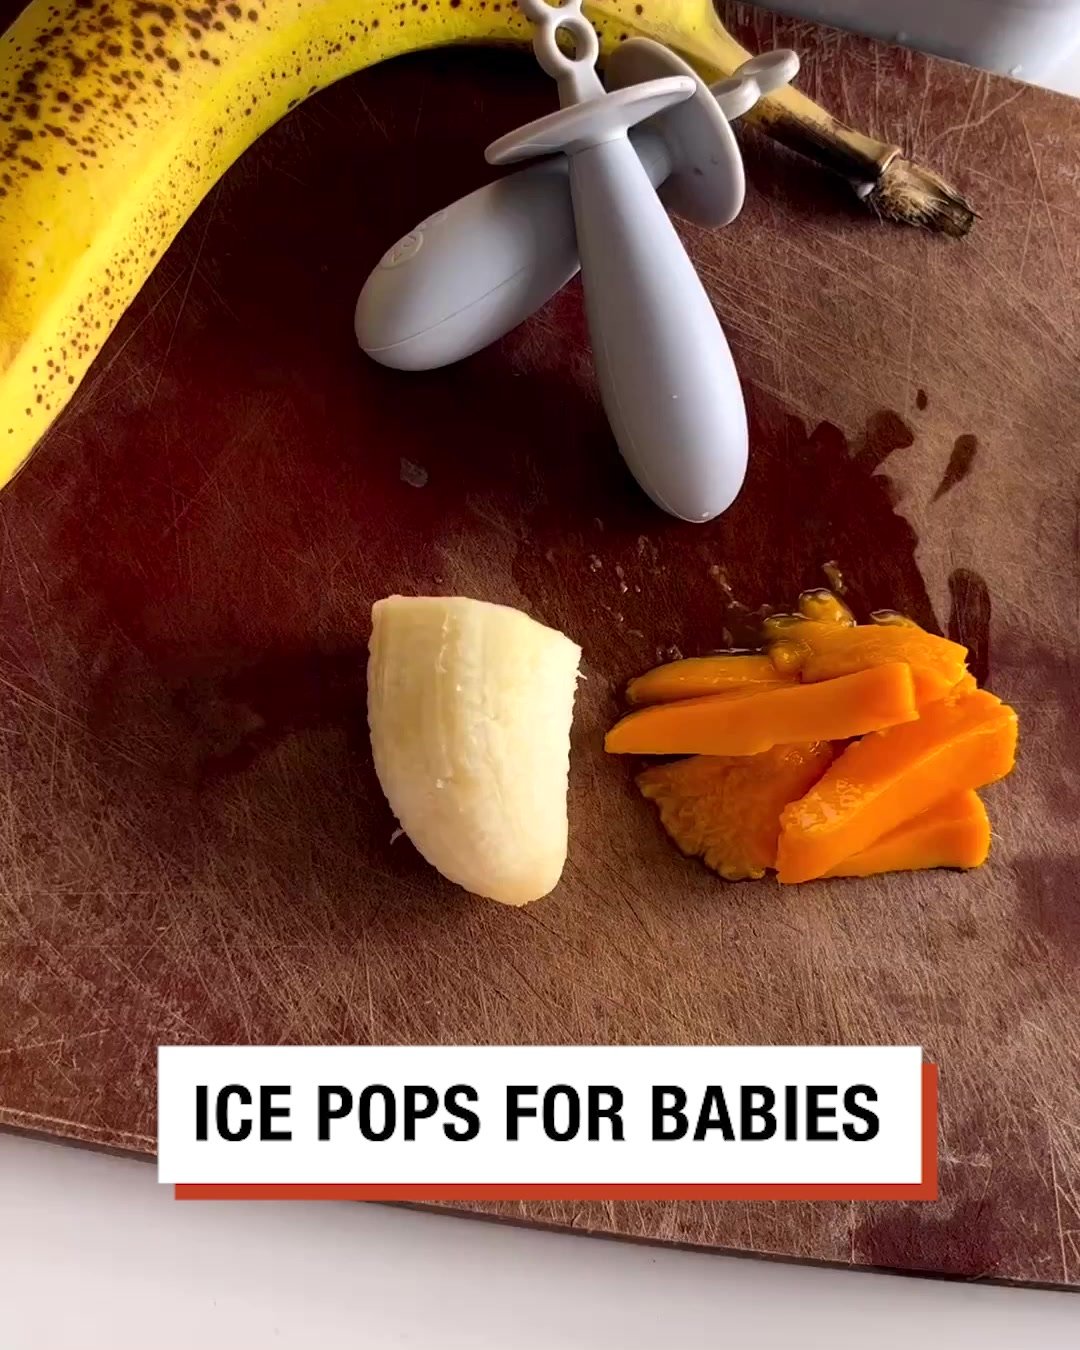 LADbible Video hub - Ice Pops For Babies ðŸ‘¶ðŸ�“